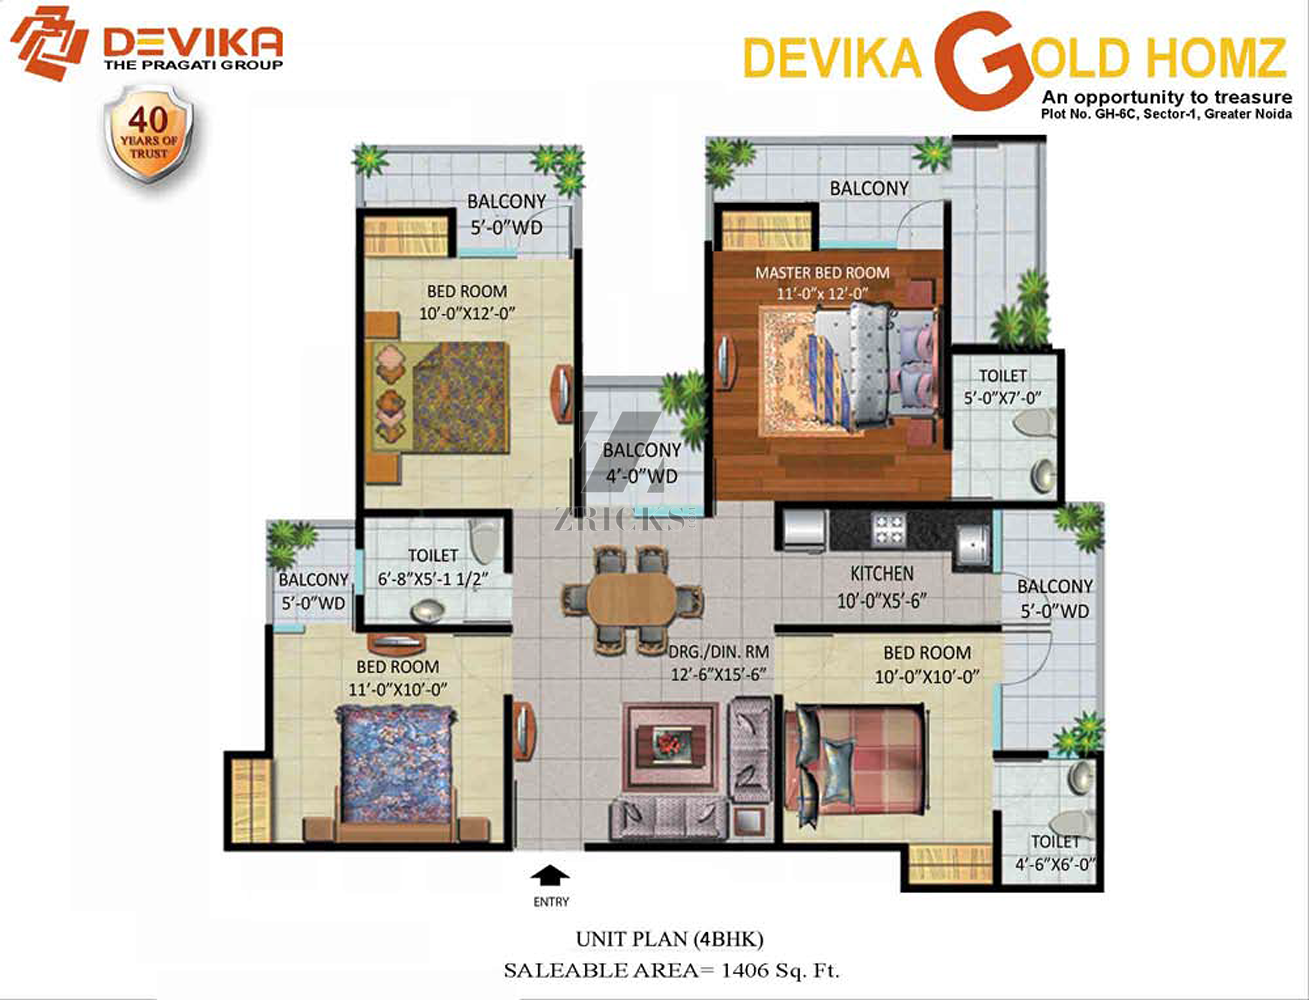 Devika Gold Homz Floor Plan